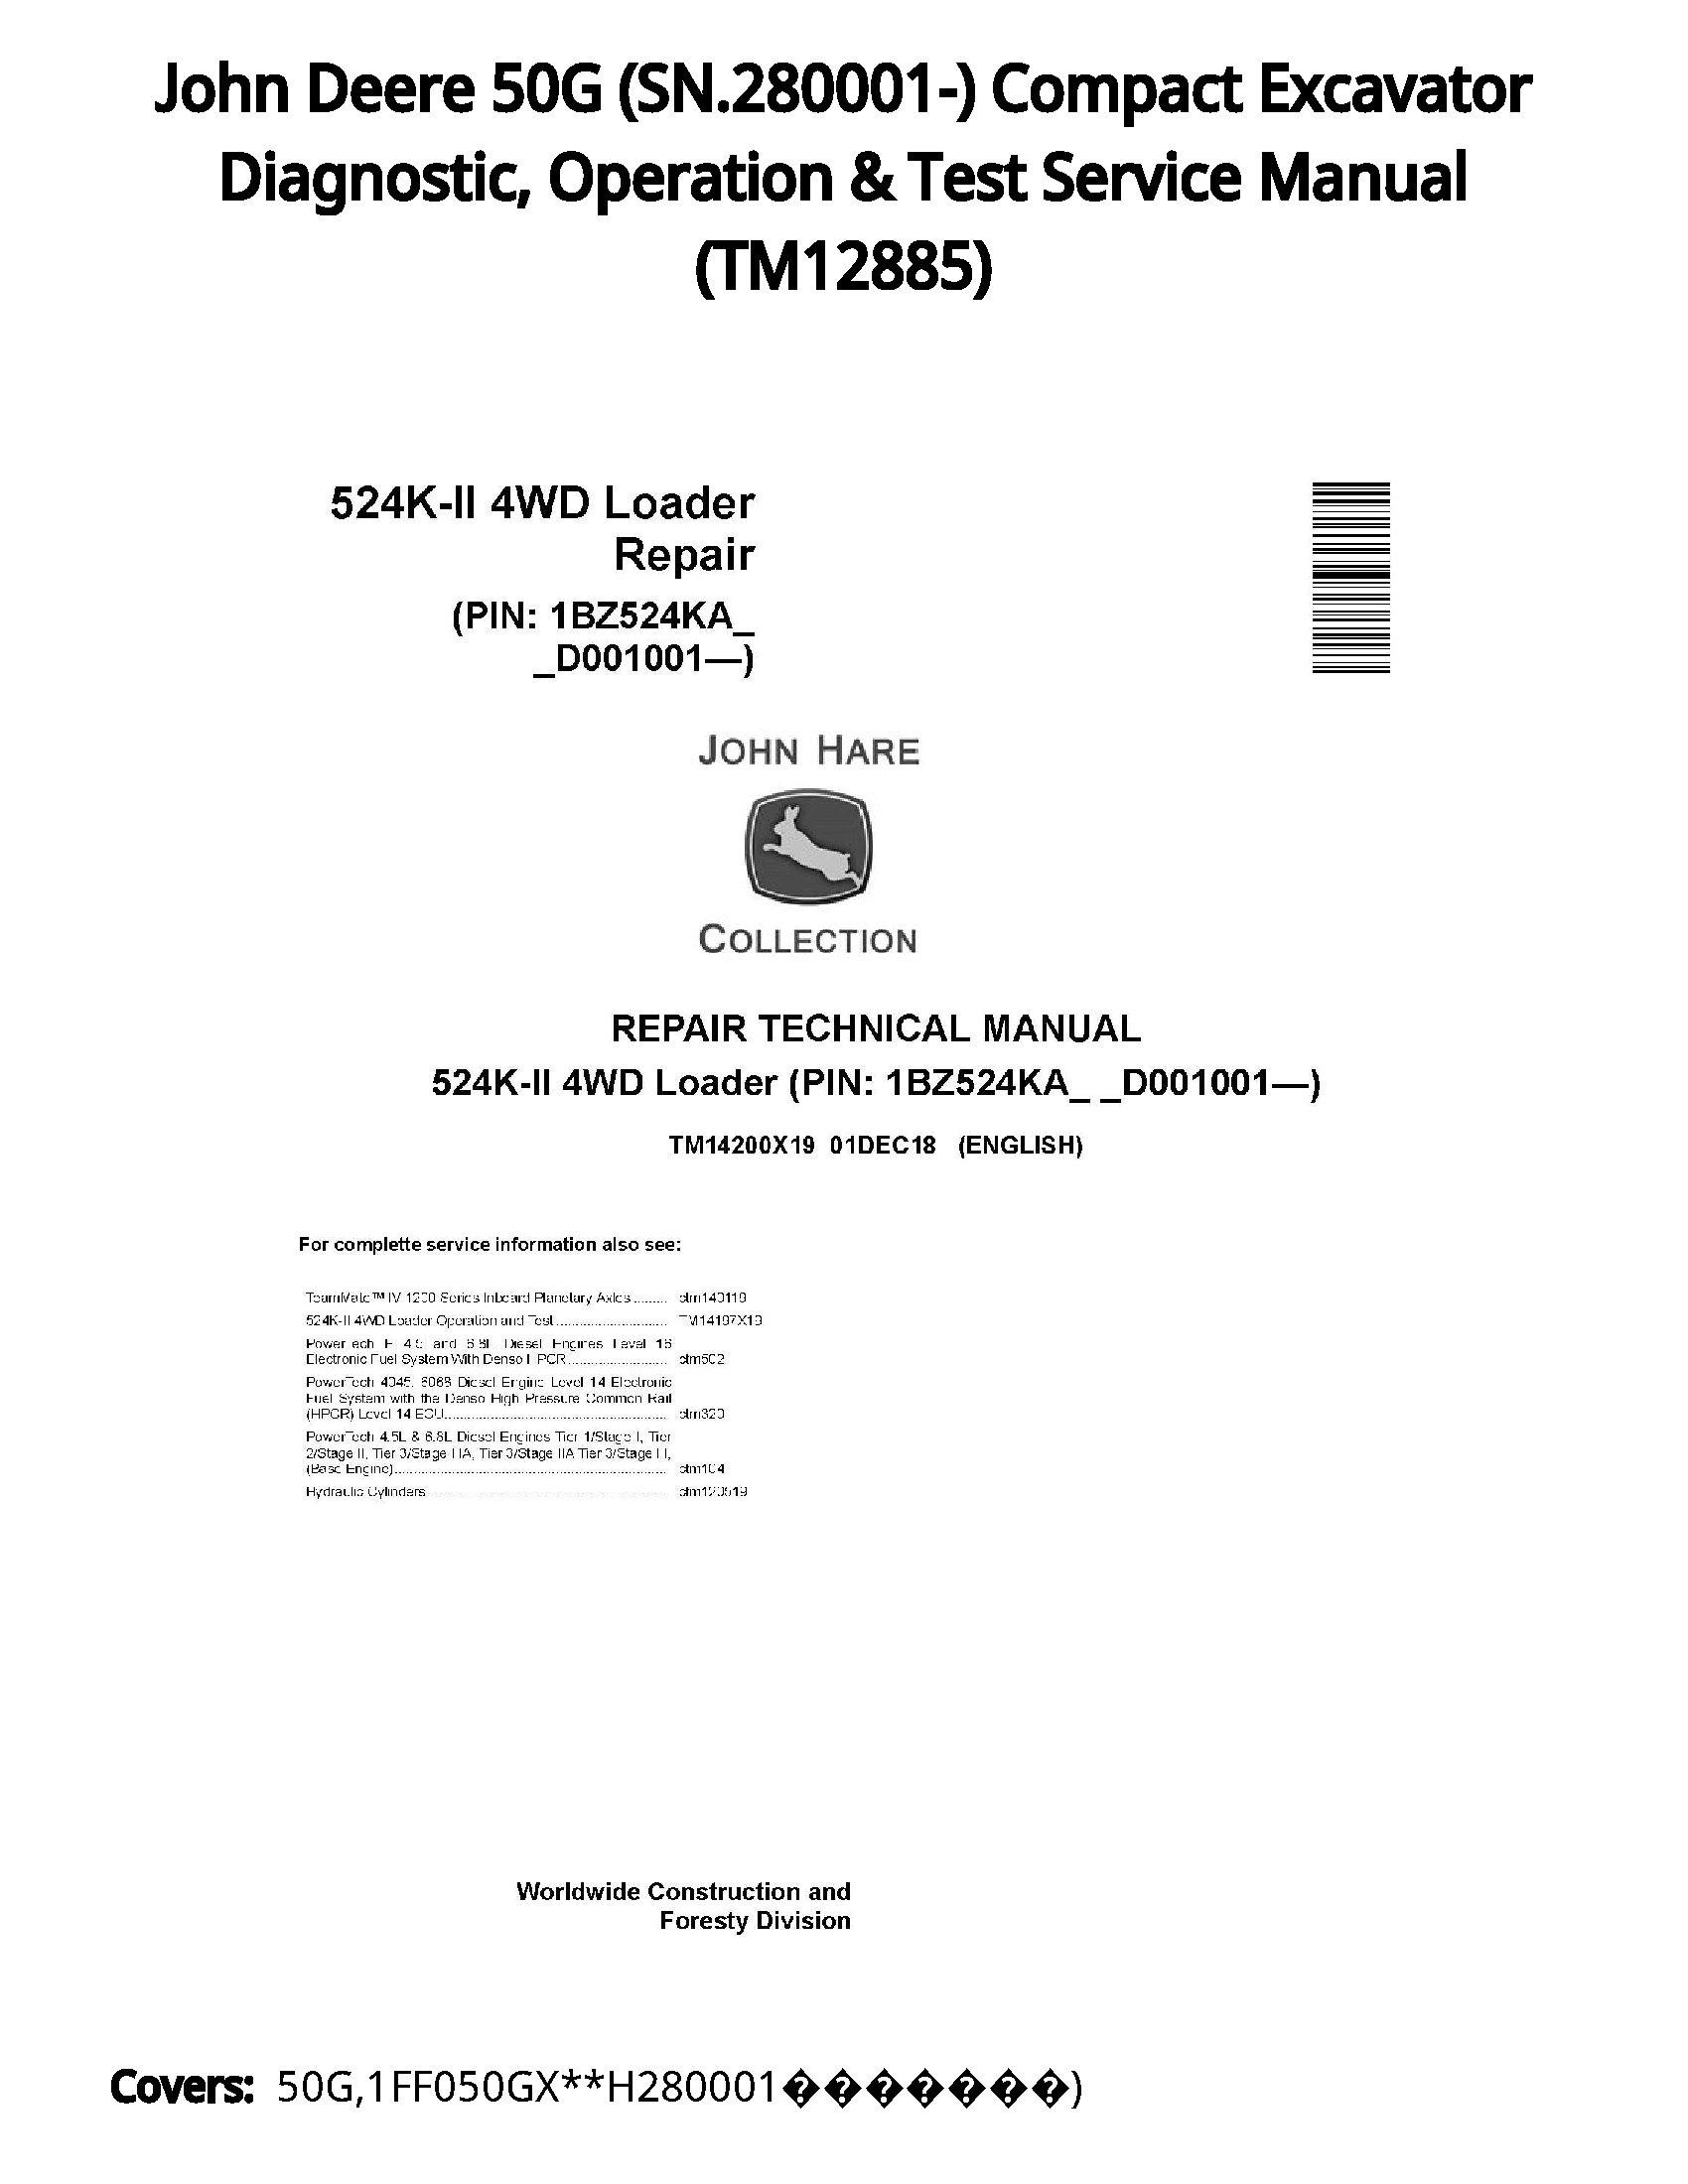 John Deere 50G (SN.280001-) Compact Excavator Diagnostic  Operation & Test Service Manual - TM12885